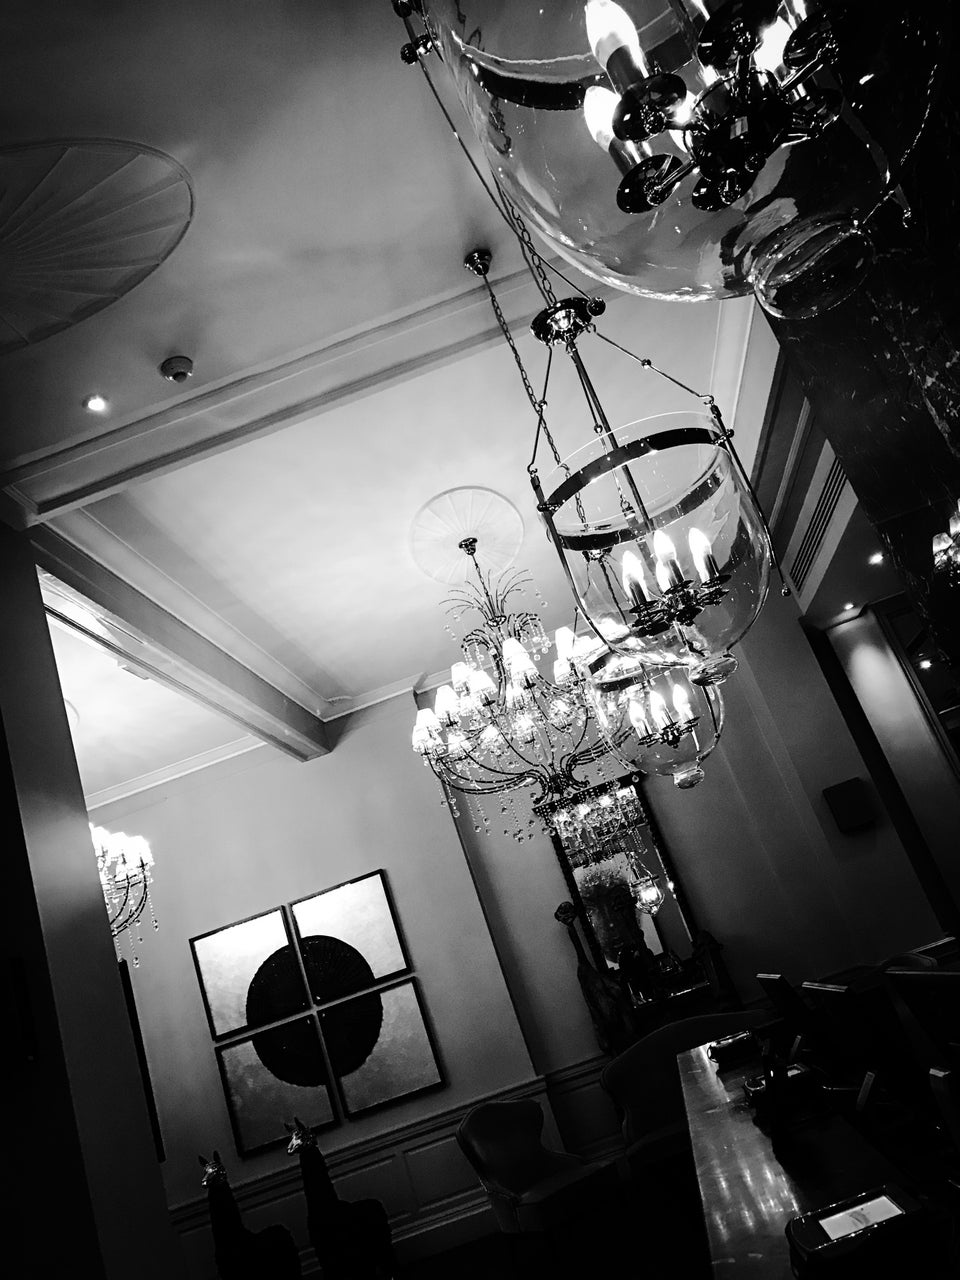 Photo of Radisson Blu Edwardian Grafton Hotel, London